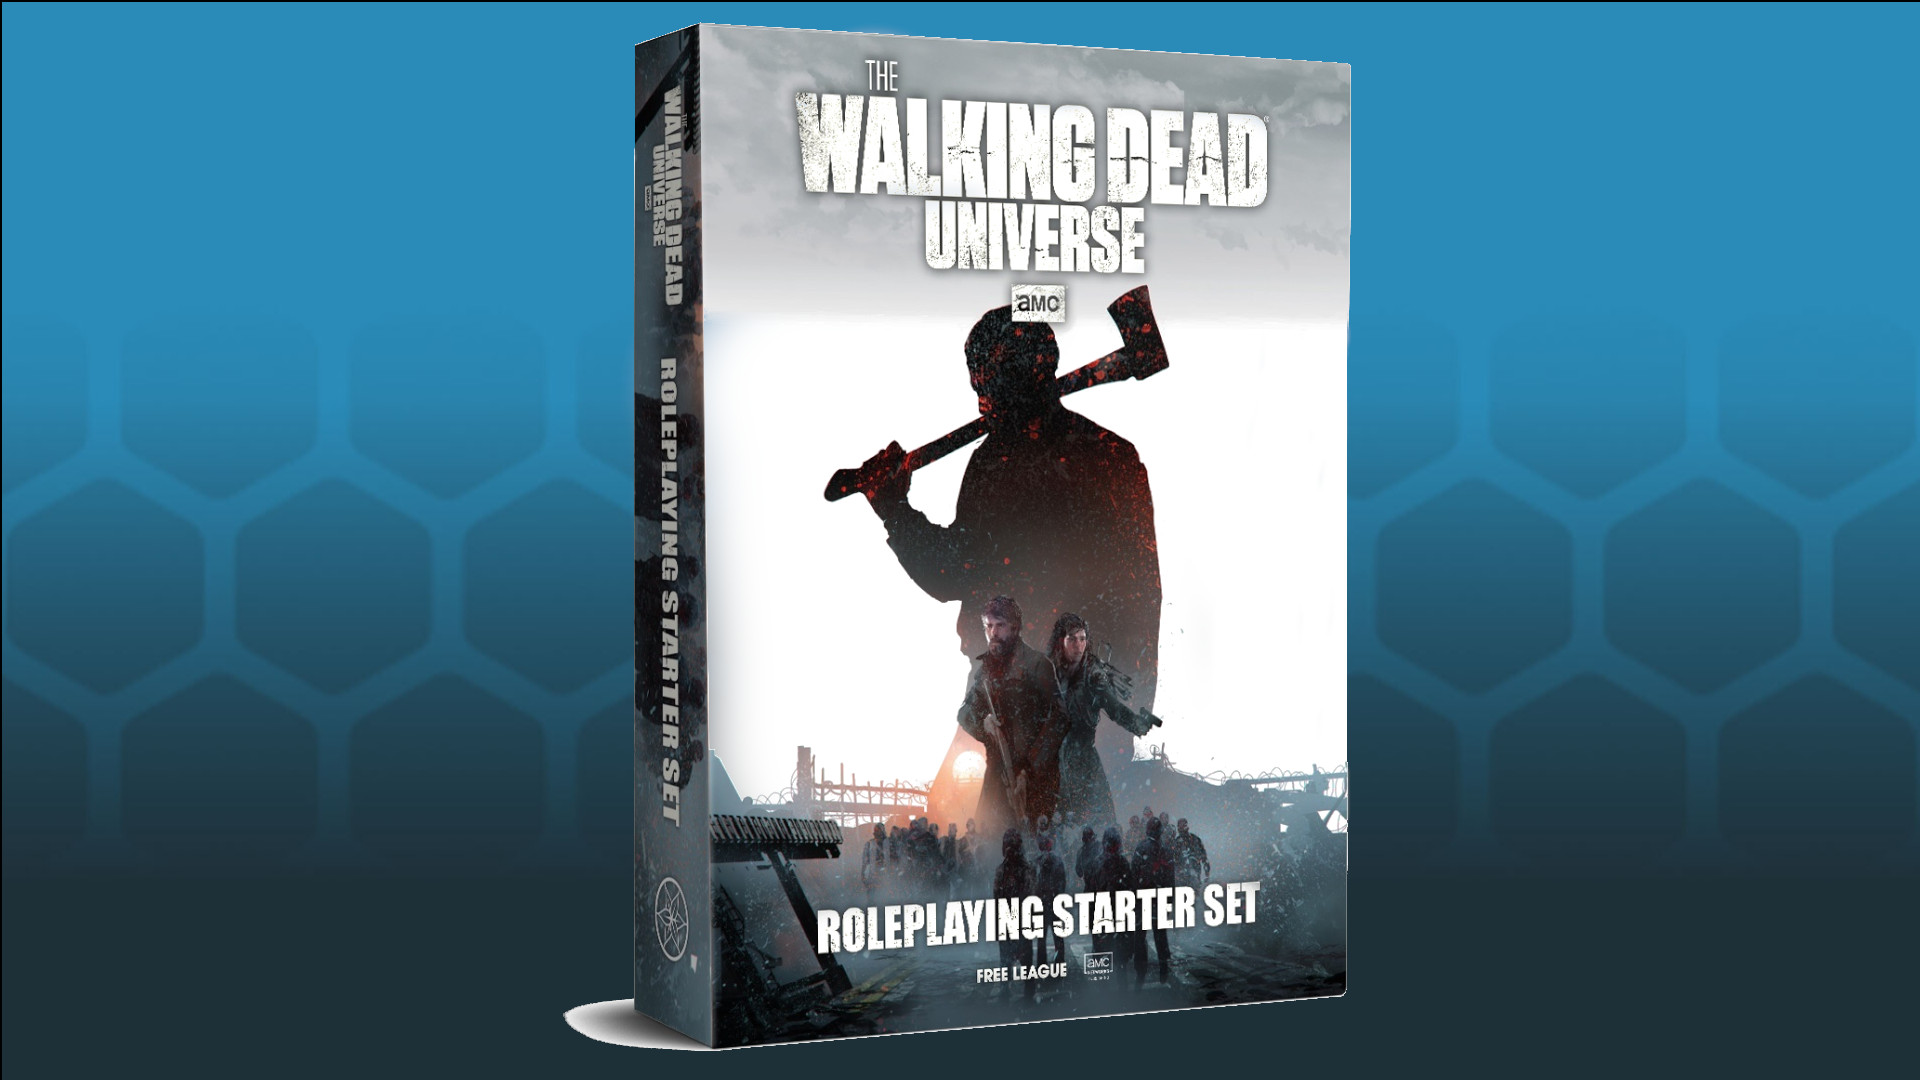 The Walking Dead RPG starter set from Free League Publishing